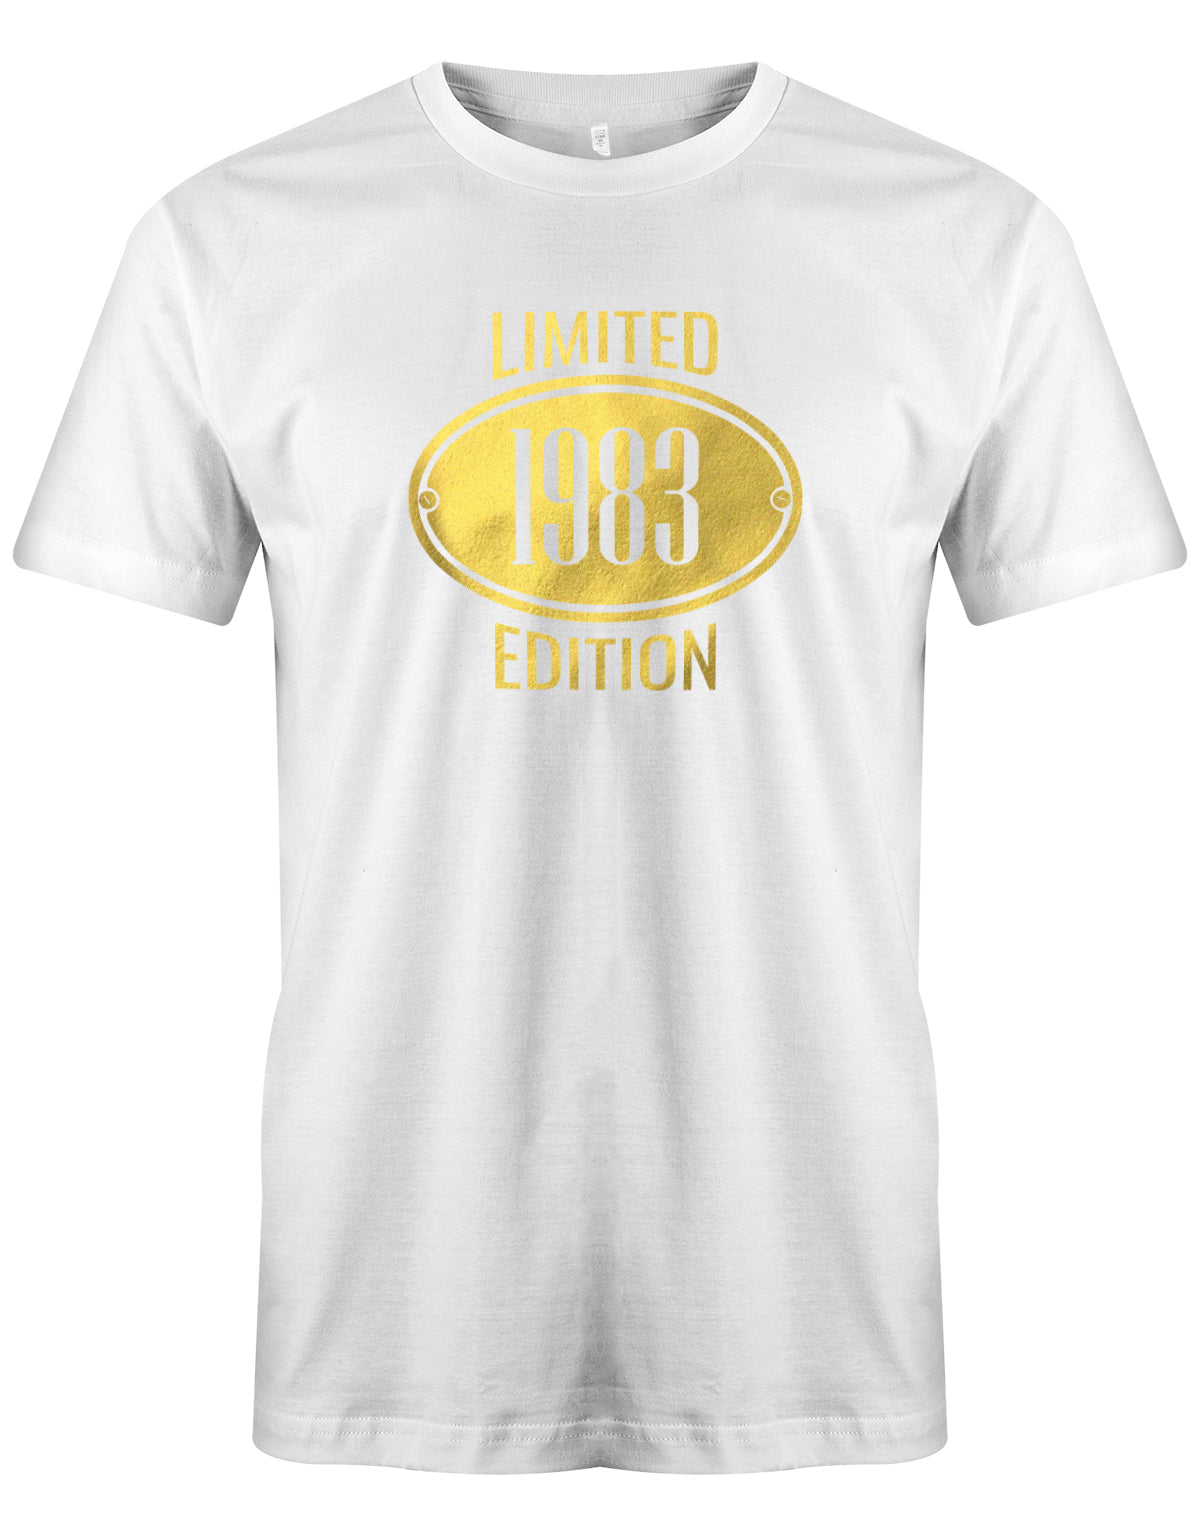 Limited Edition Gold 1983 - T-Shirt 40 Geburtstag Männer myShirtStore Weiss